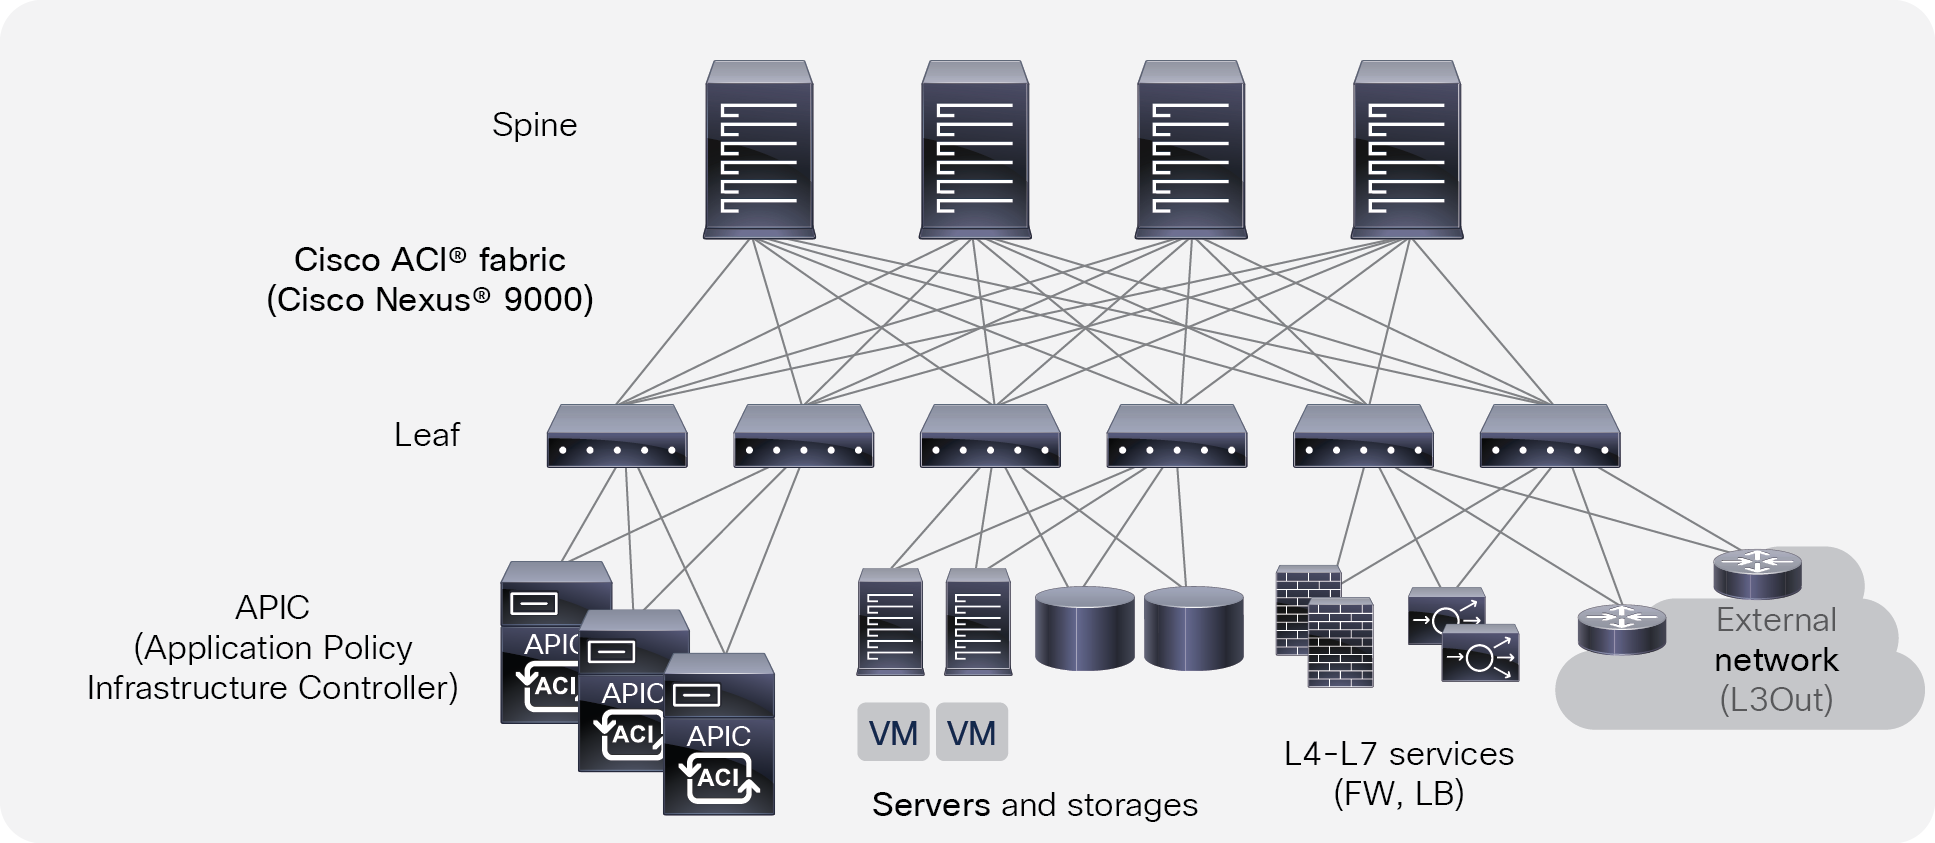 Cisco ACI topology